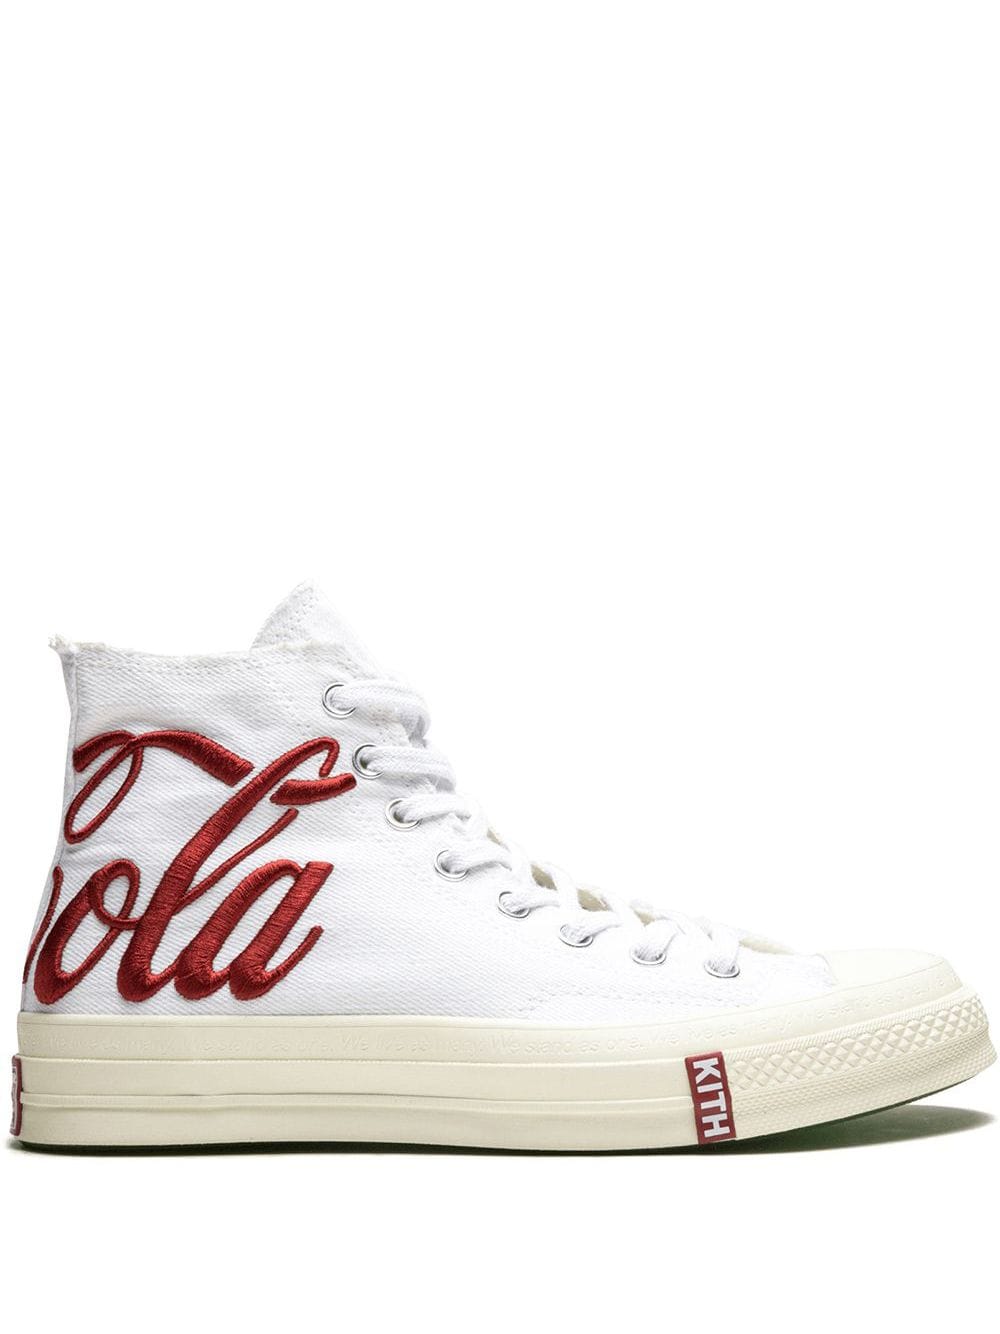 Kith x Coca-Cola Chuck 70 Hi Sneakers 